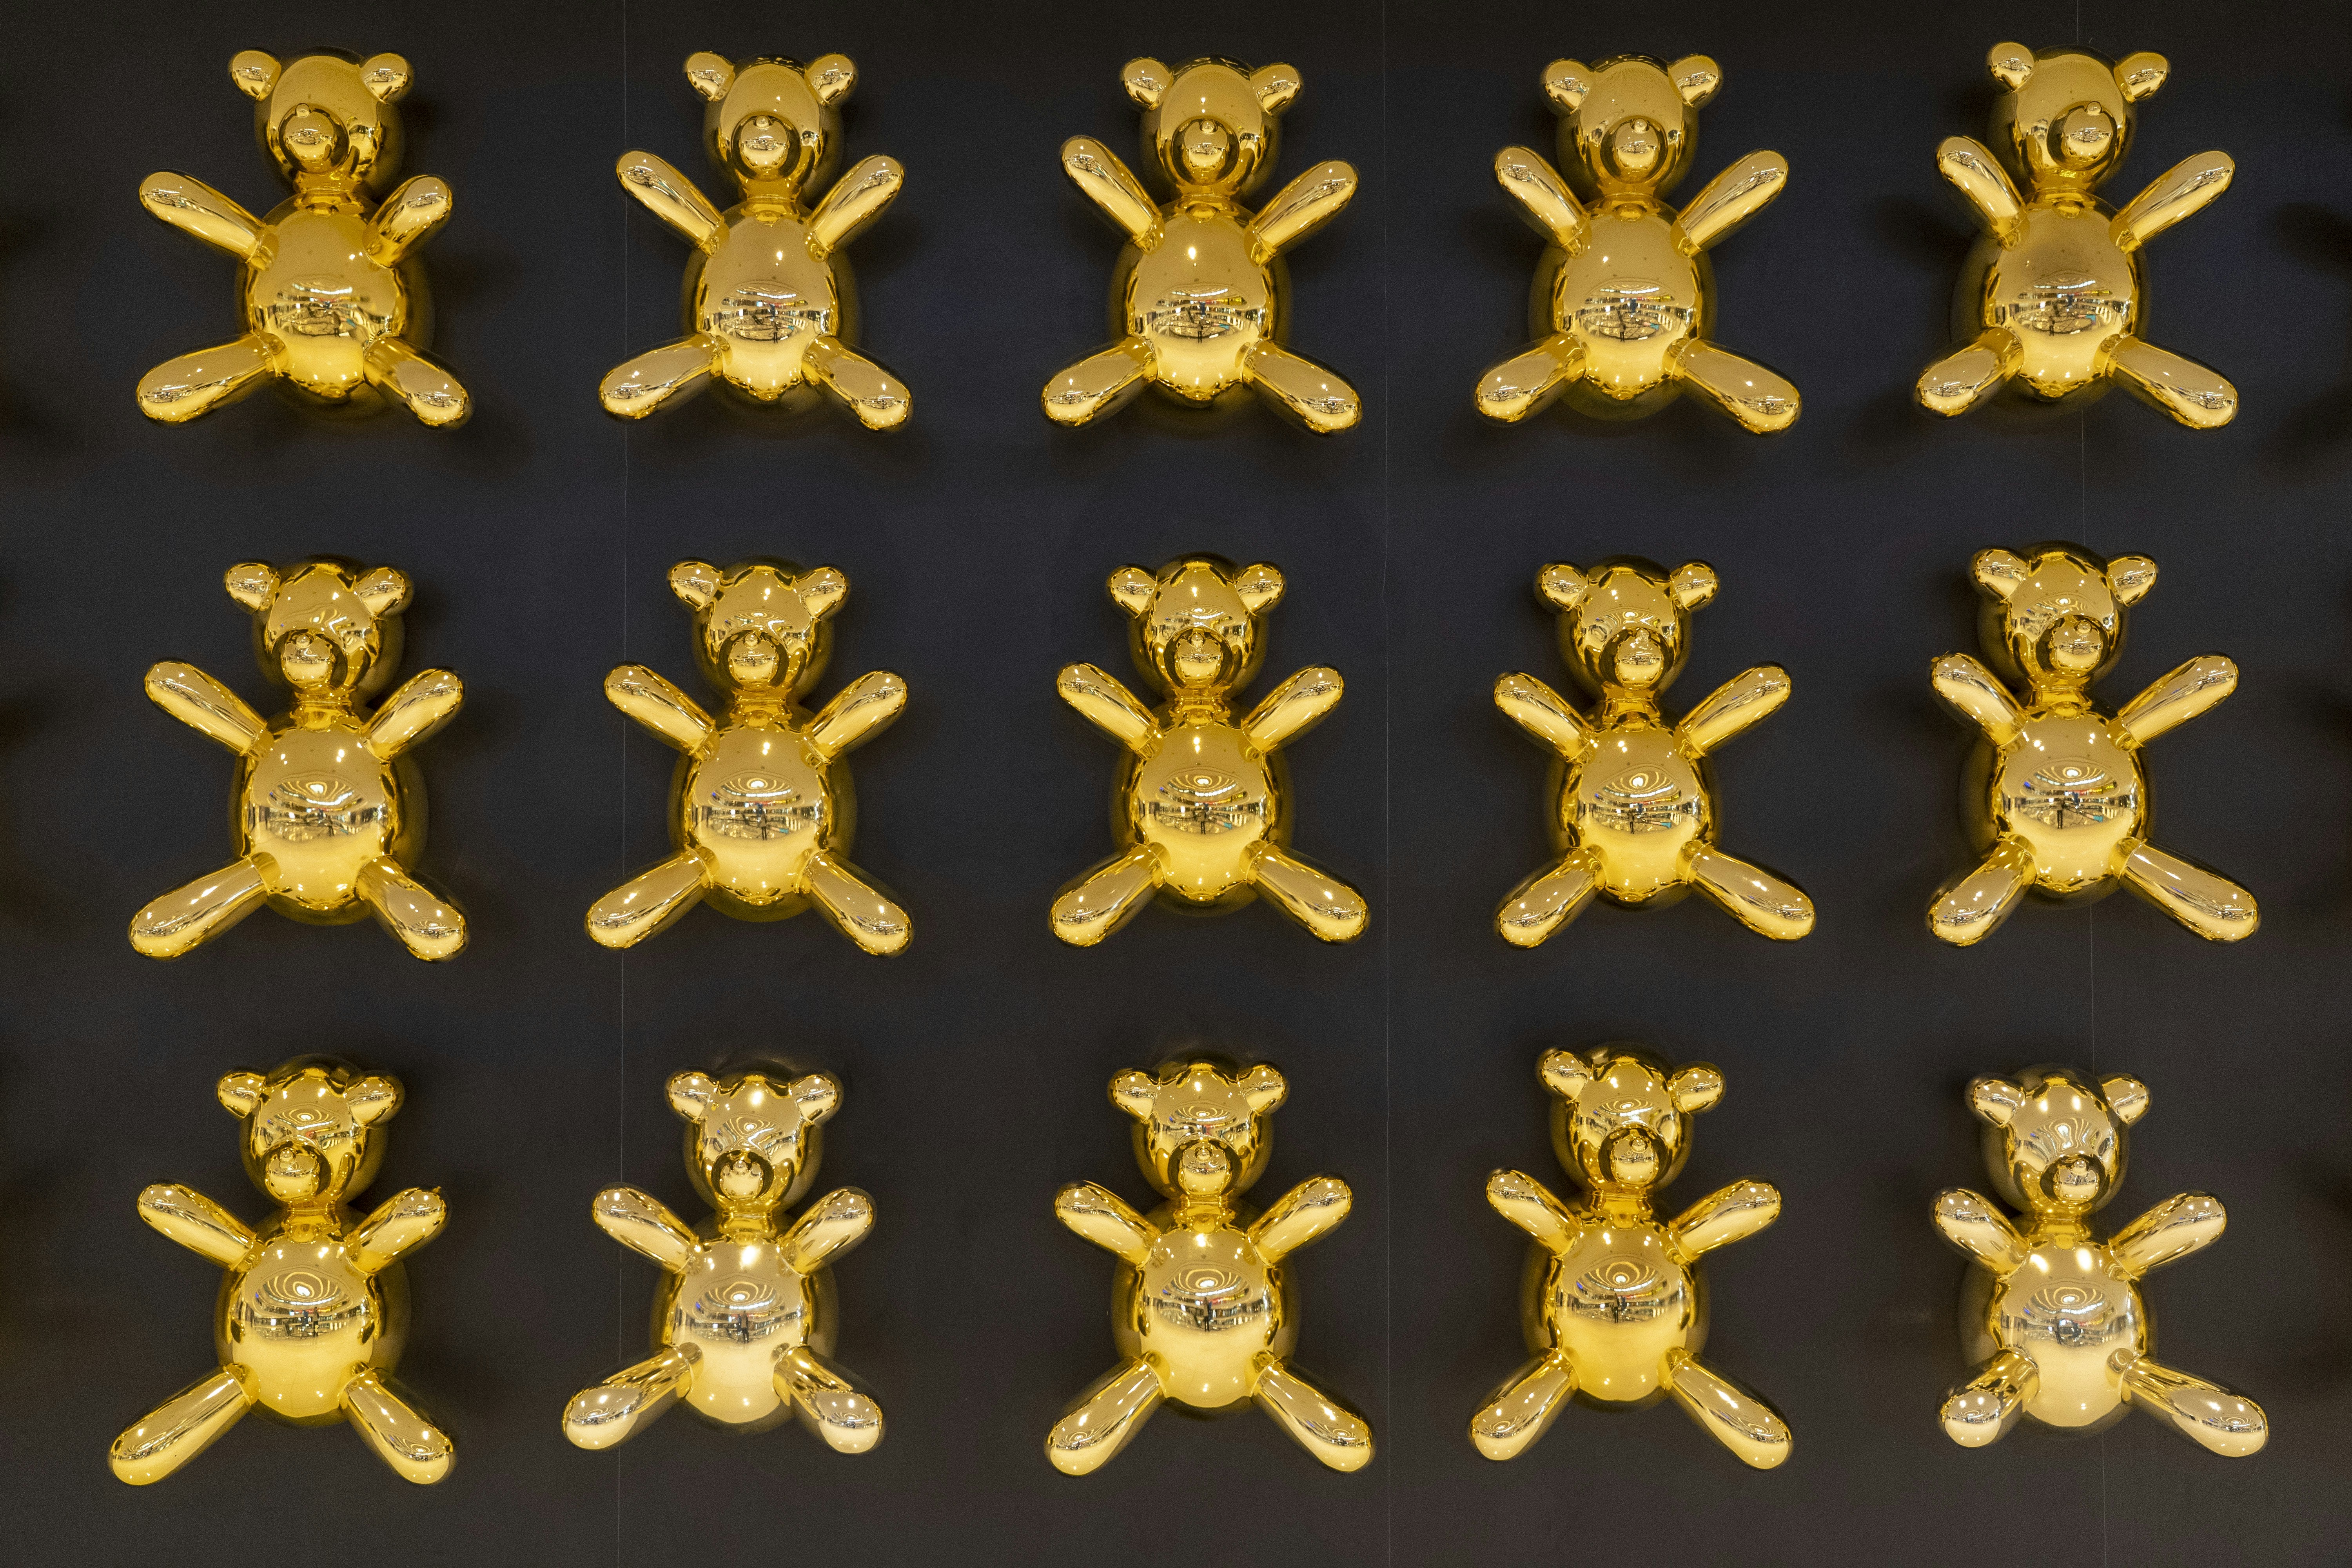 Golden teddy bears that were part of a shop display at the Burj Khalifa Shopping Mall, Dubai.